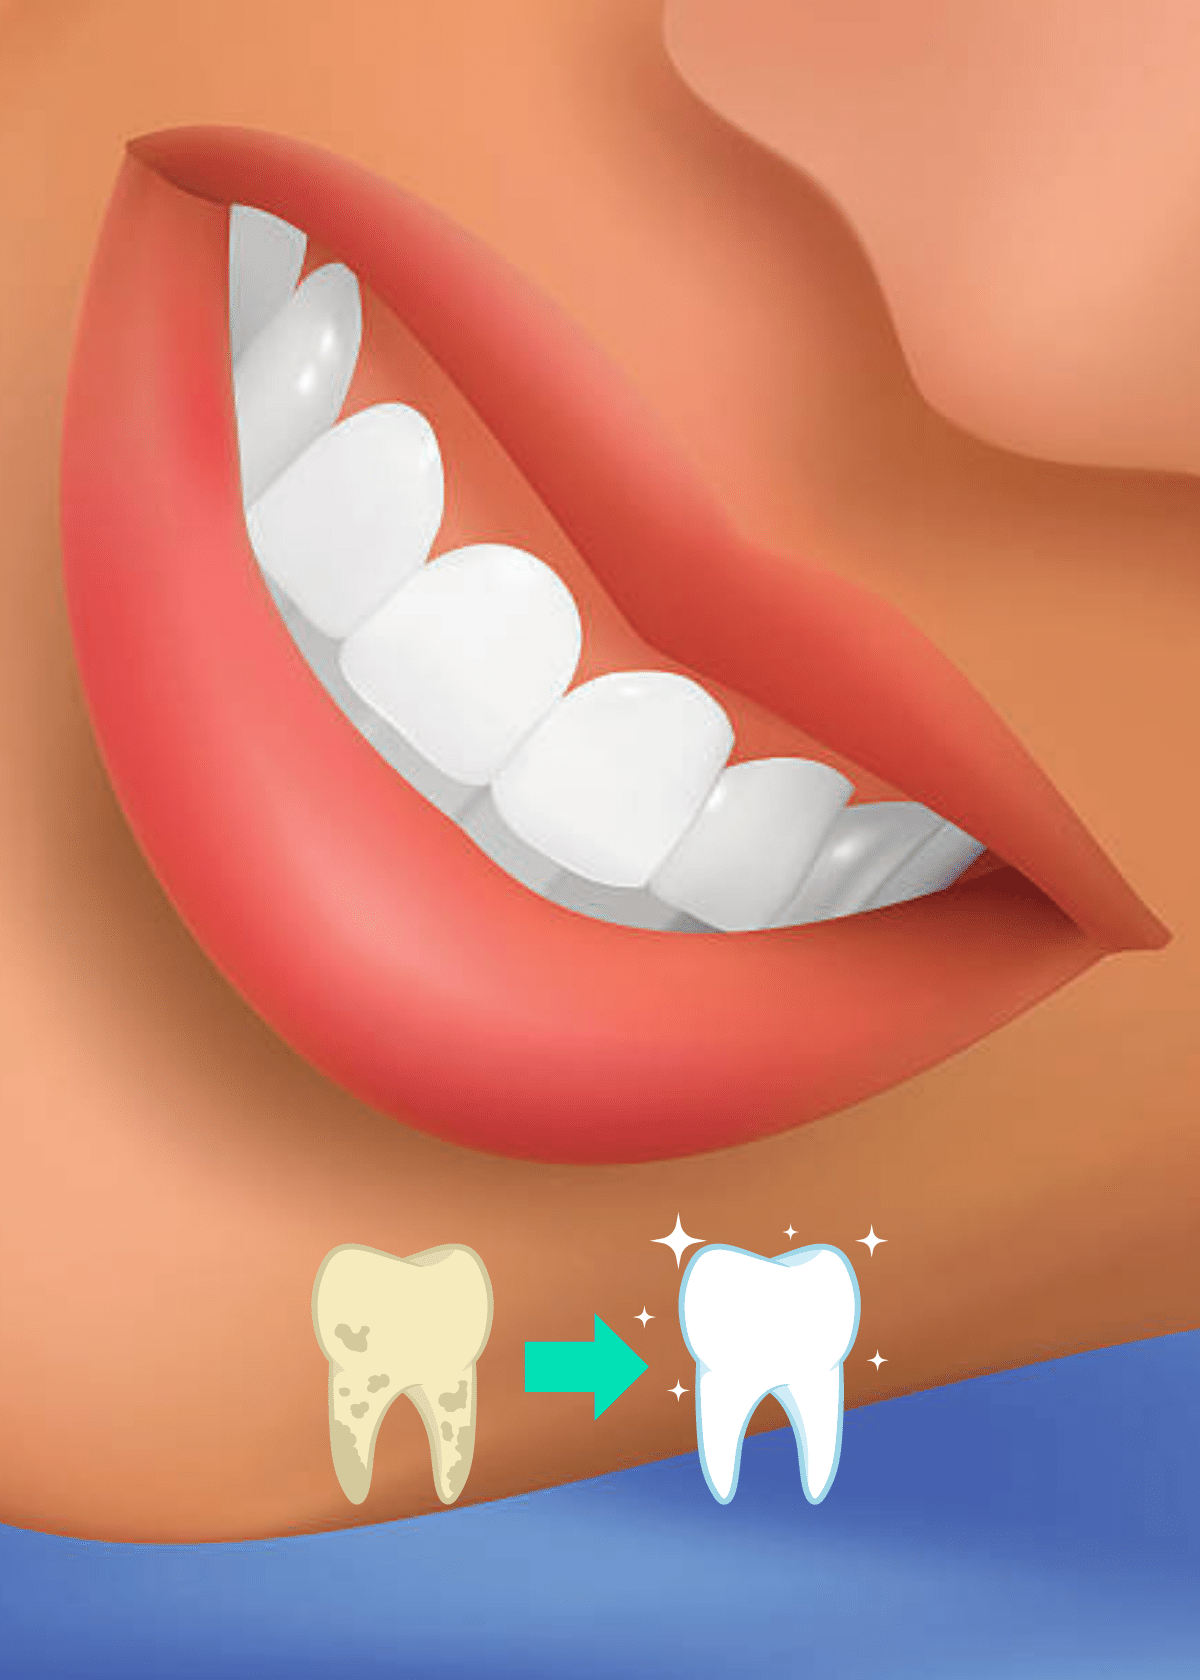 Teeth Whitening Grin